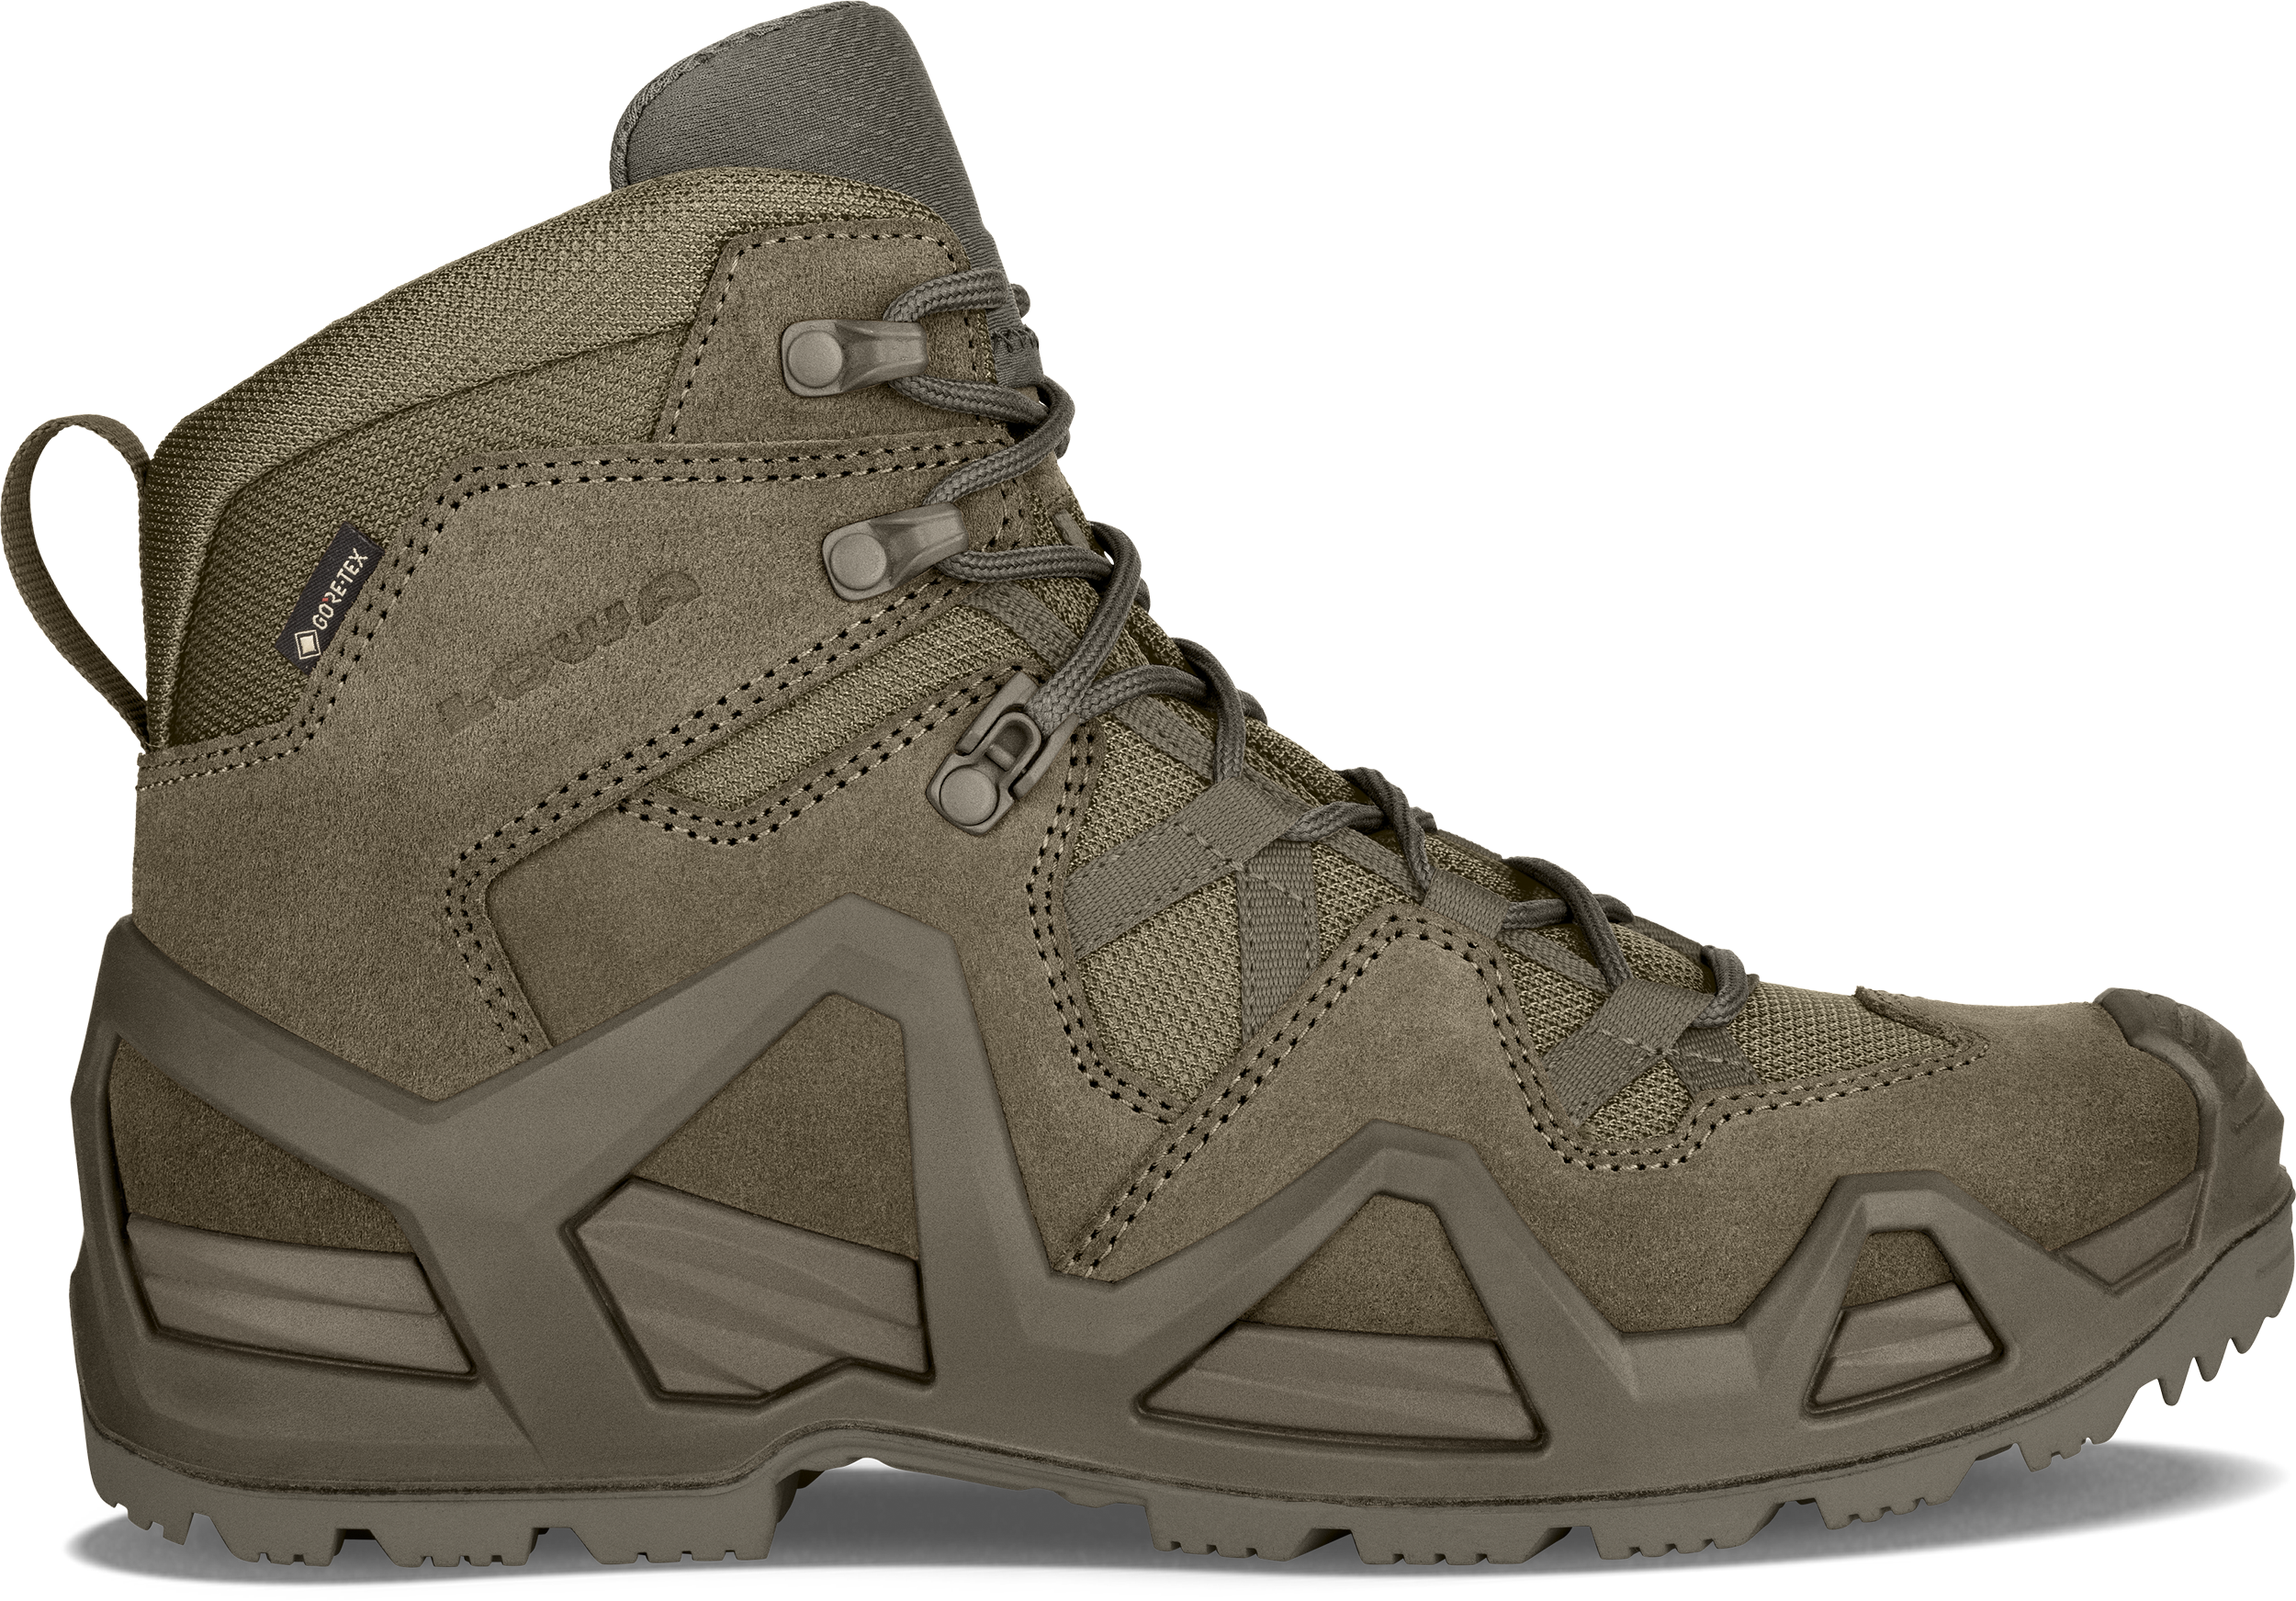 ZEPHYR MK2 GTX MID: TASK FORCE: CLOSE-QUARTERS COMBAT Shoes for 